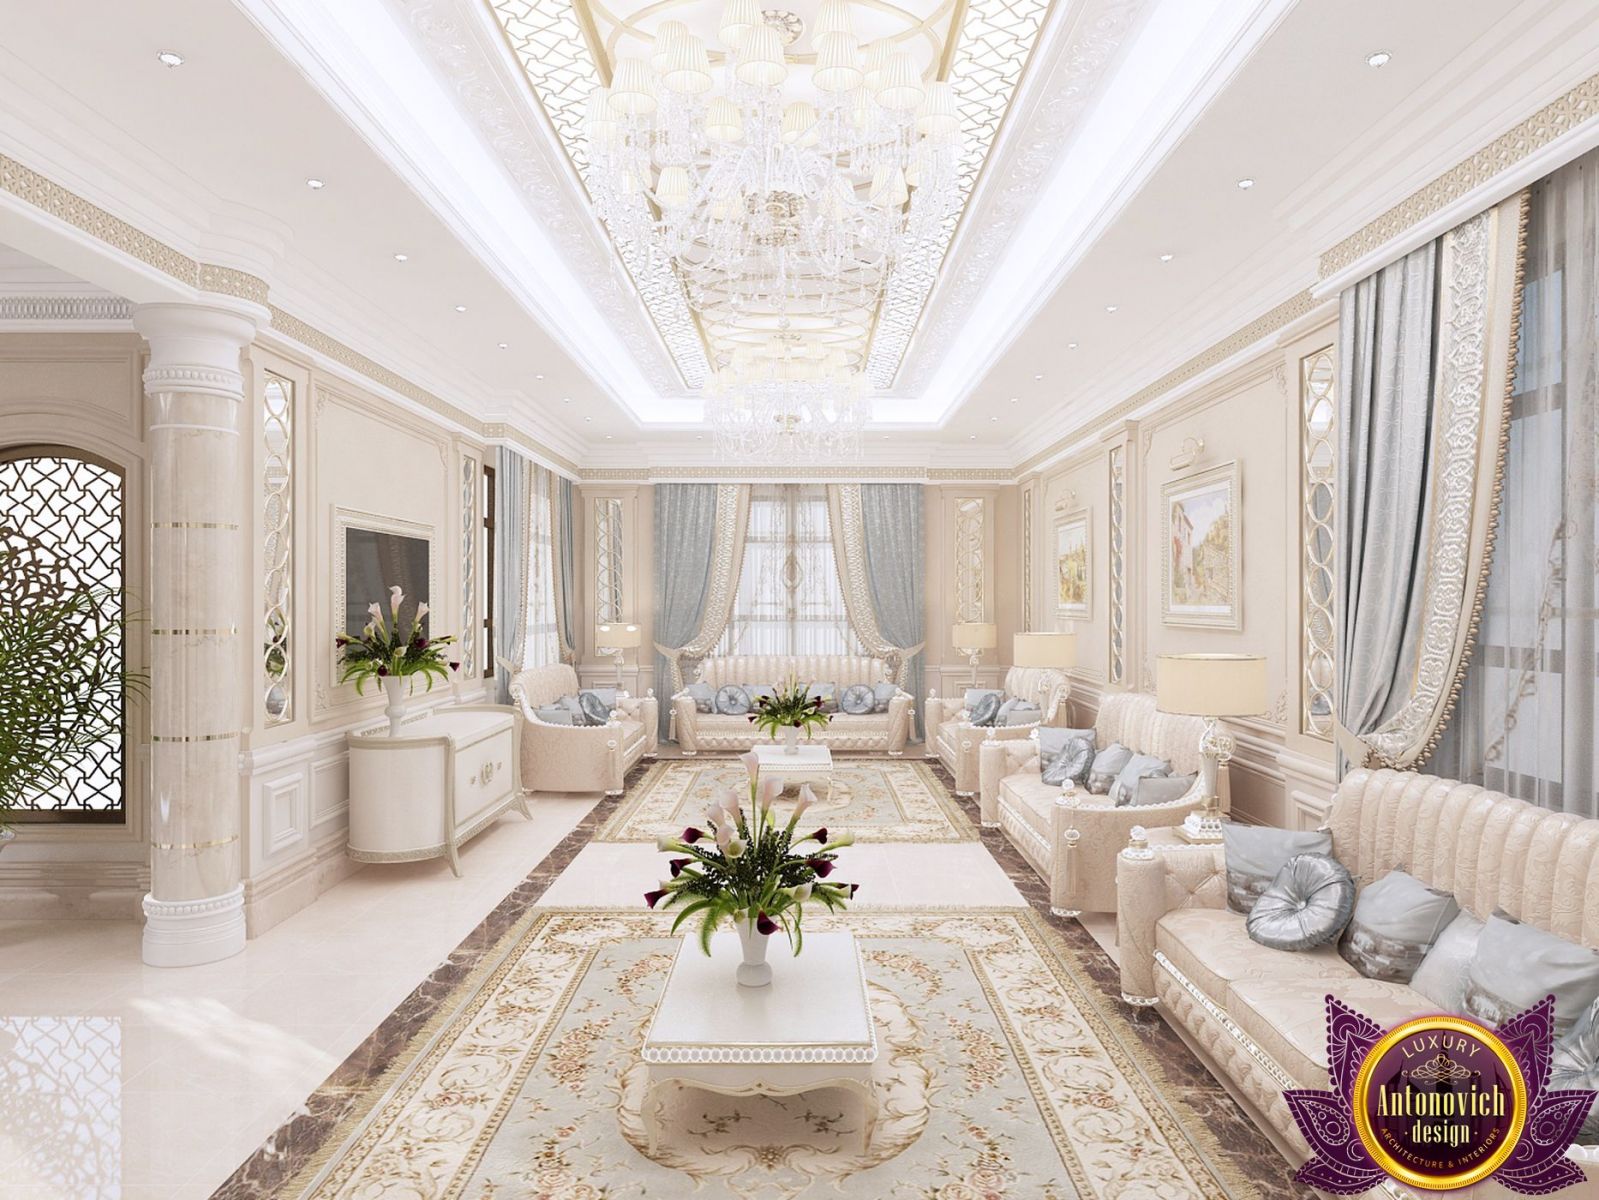 Discover Al Ain's Top Interior Design Secrets - Unveiled!